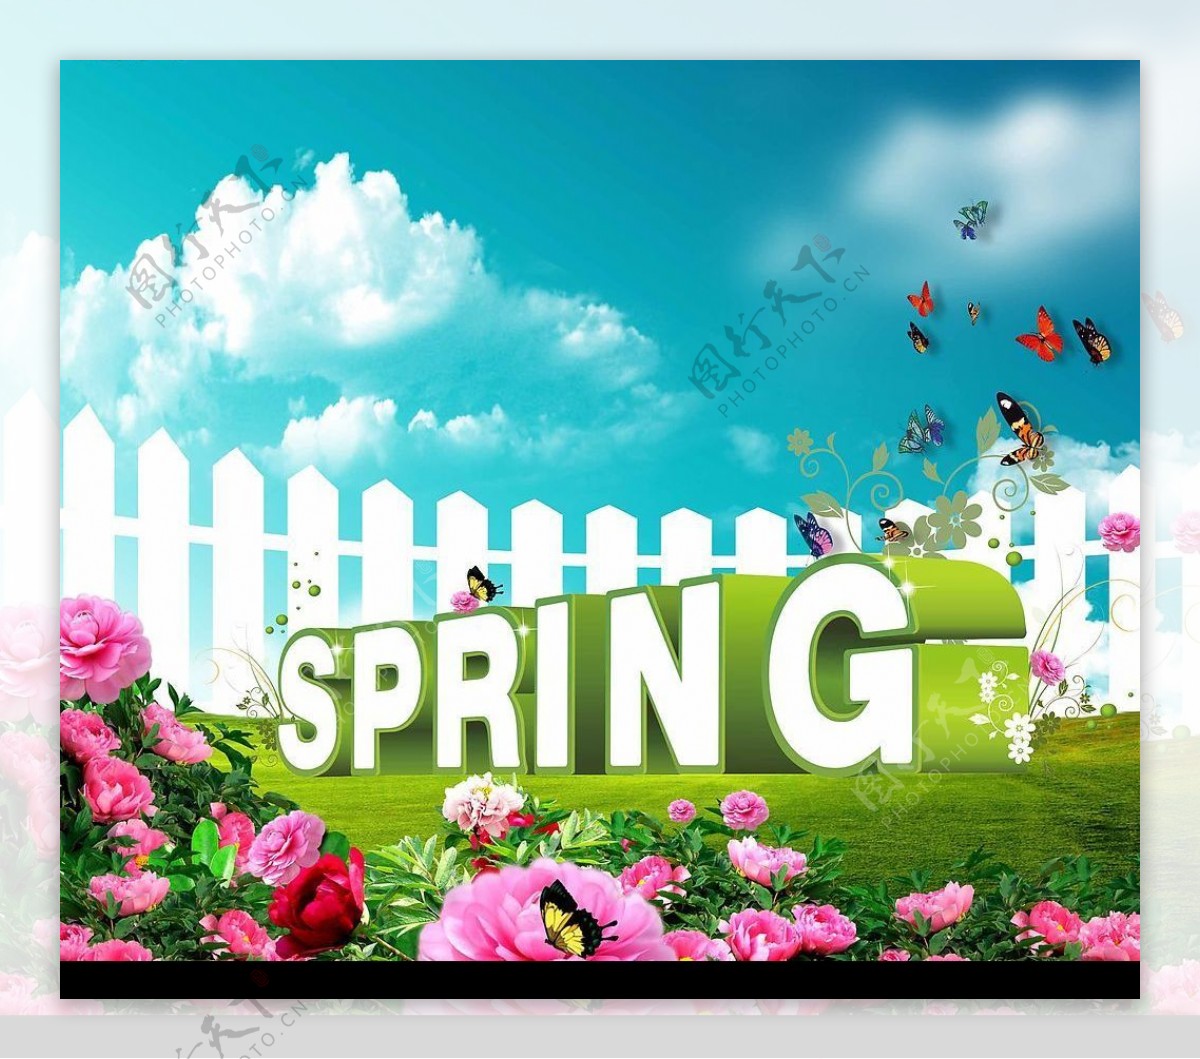 spring立体字自然美景图片